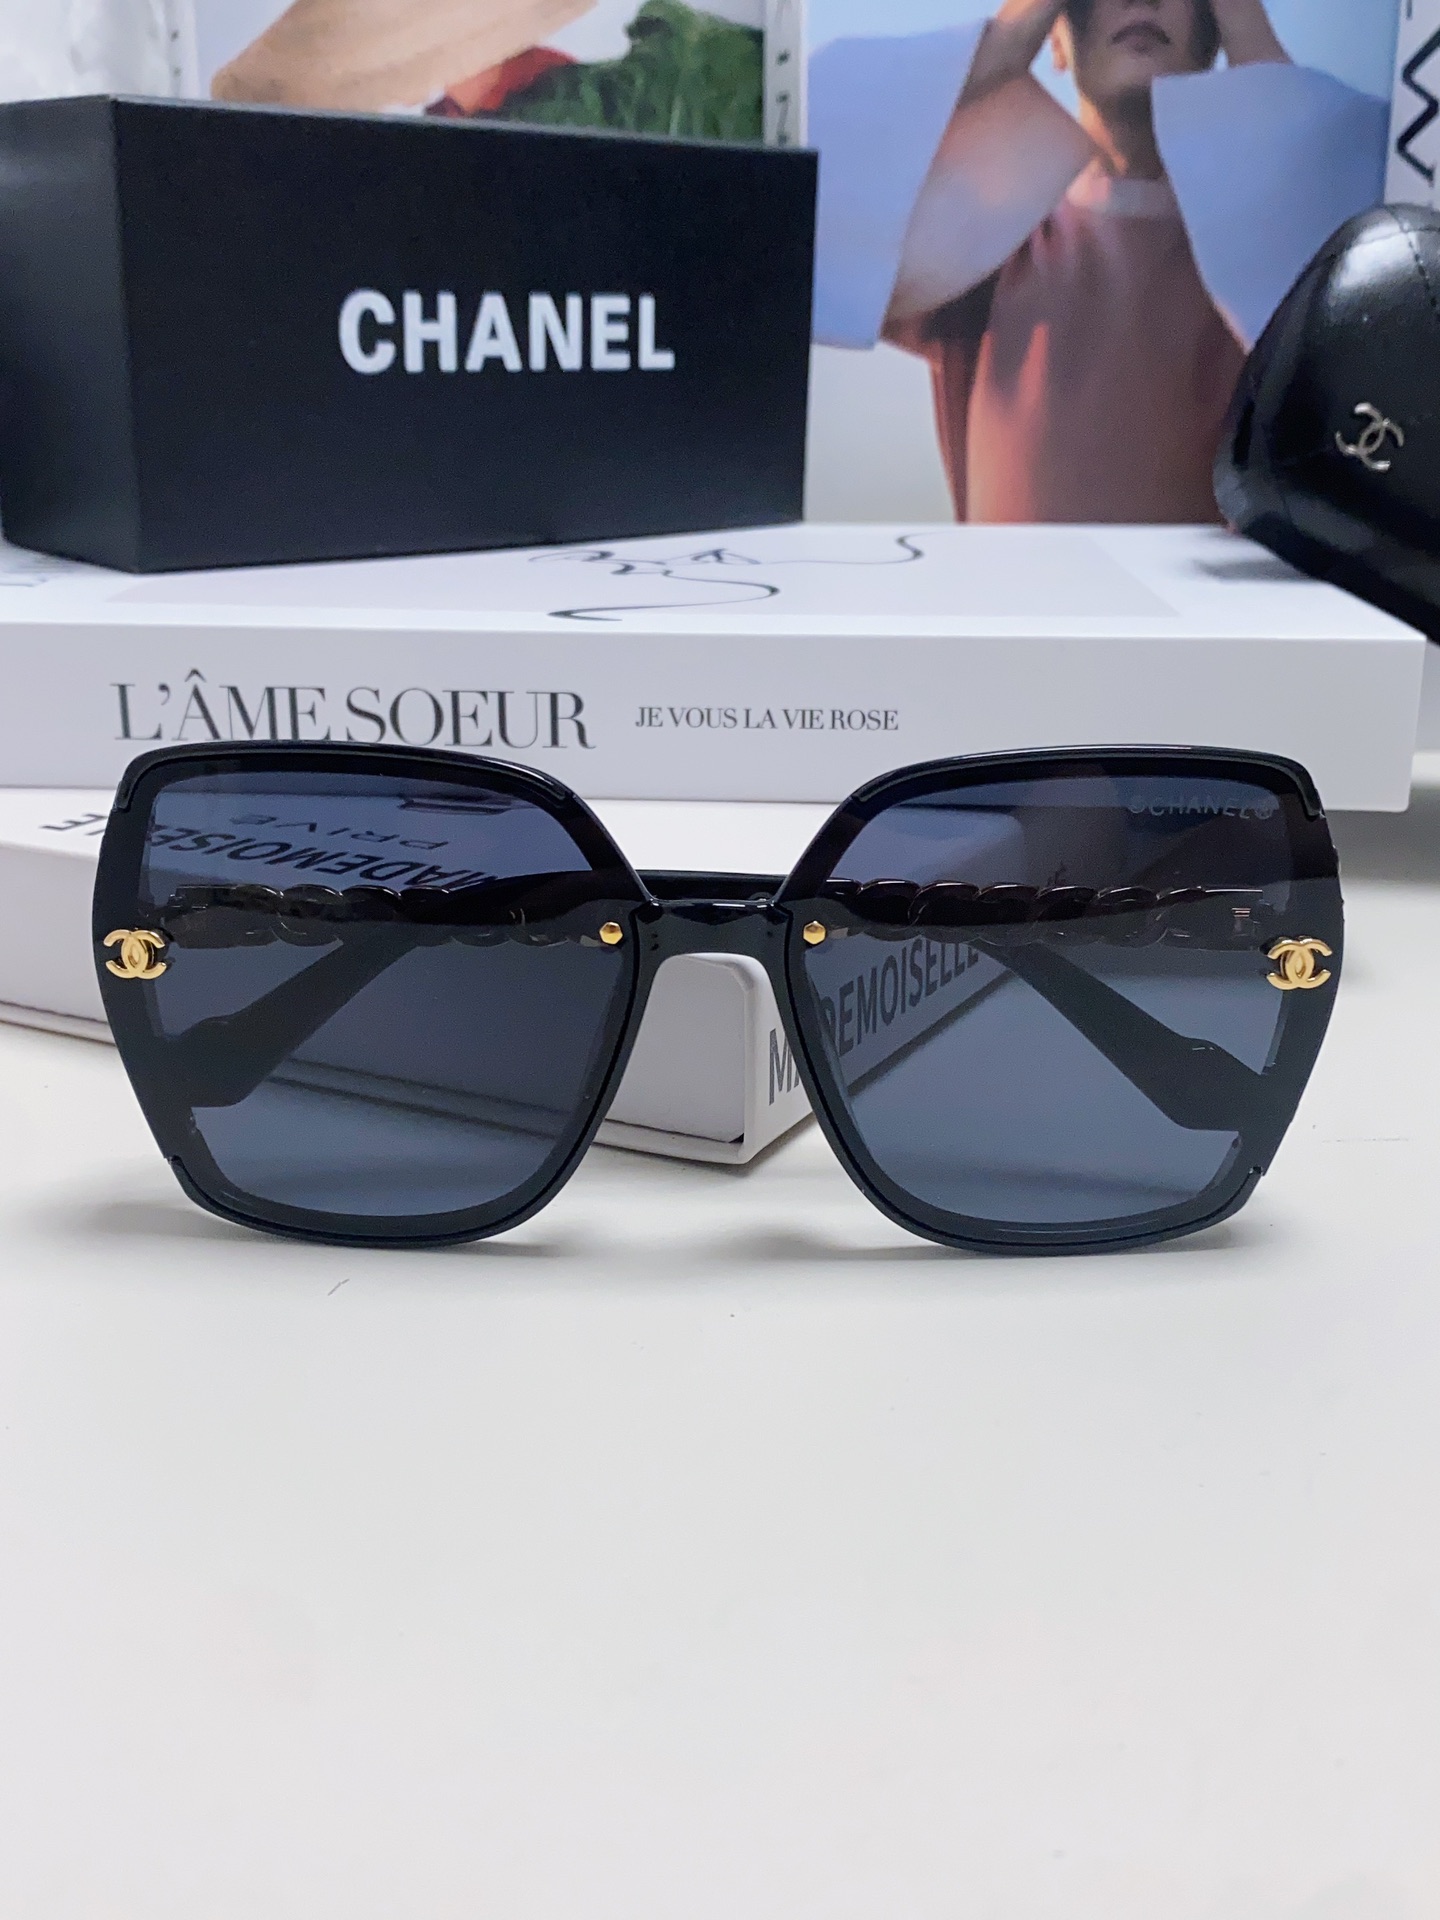 Chanel香奈儿欧美境外新款太阳镜C家网红男女款大牌墨镜旅游驾驶眼镜潮流版型搭配皮链